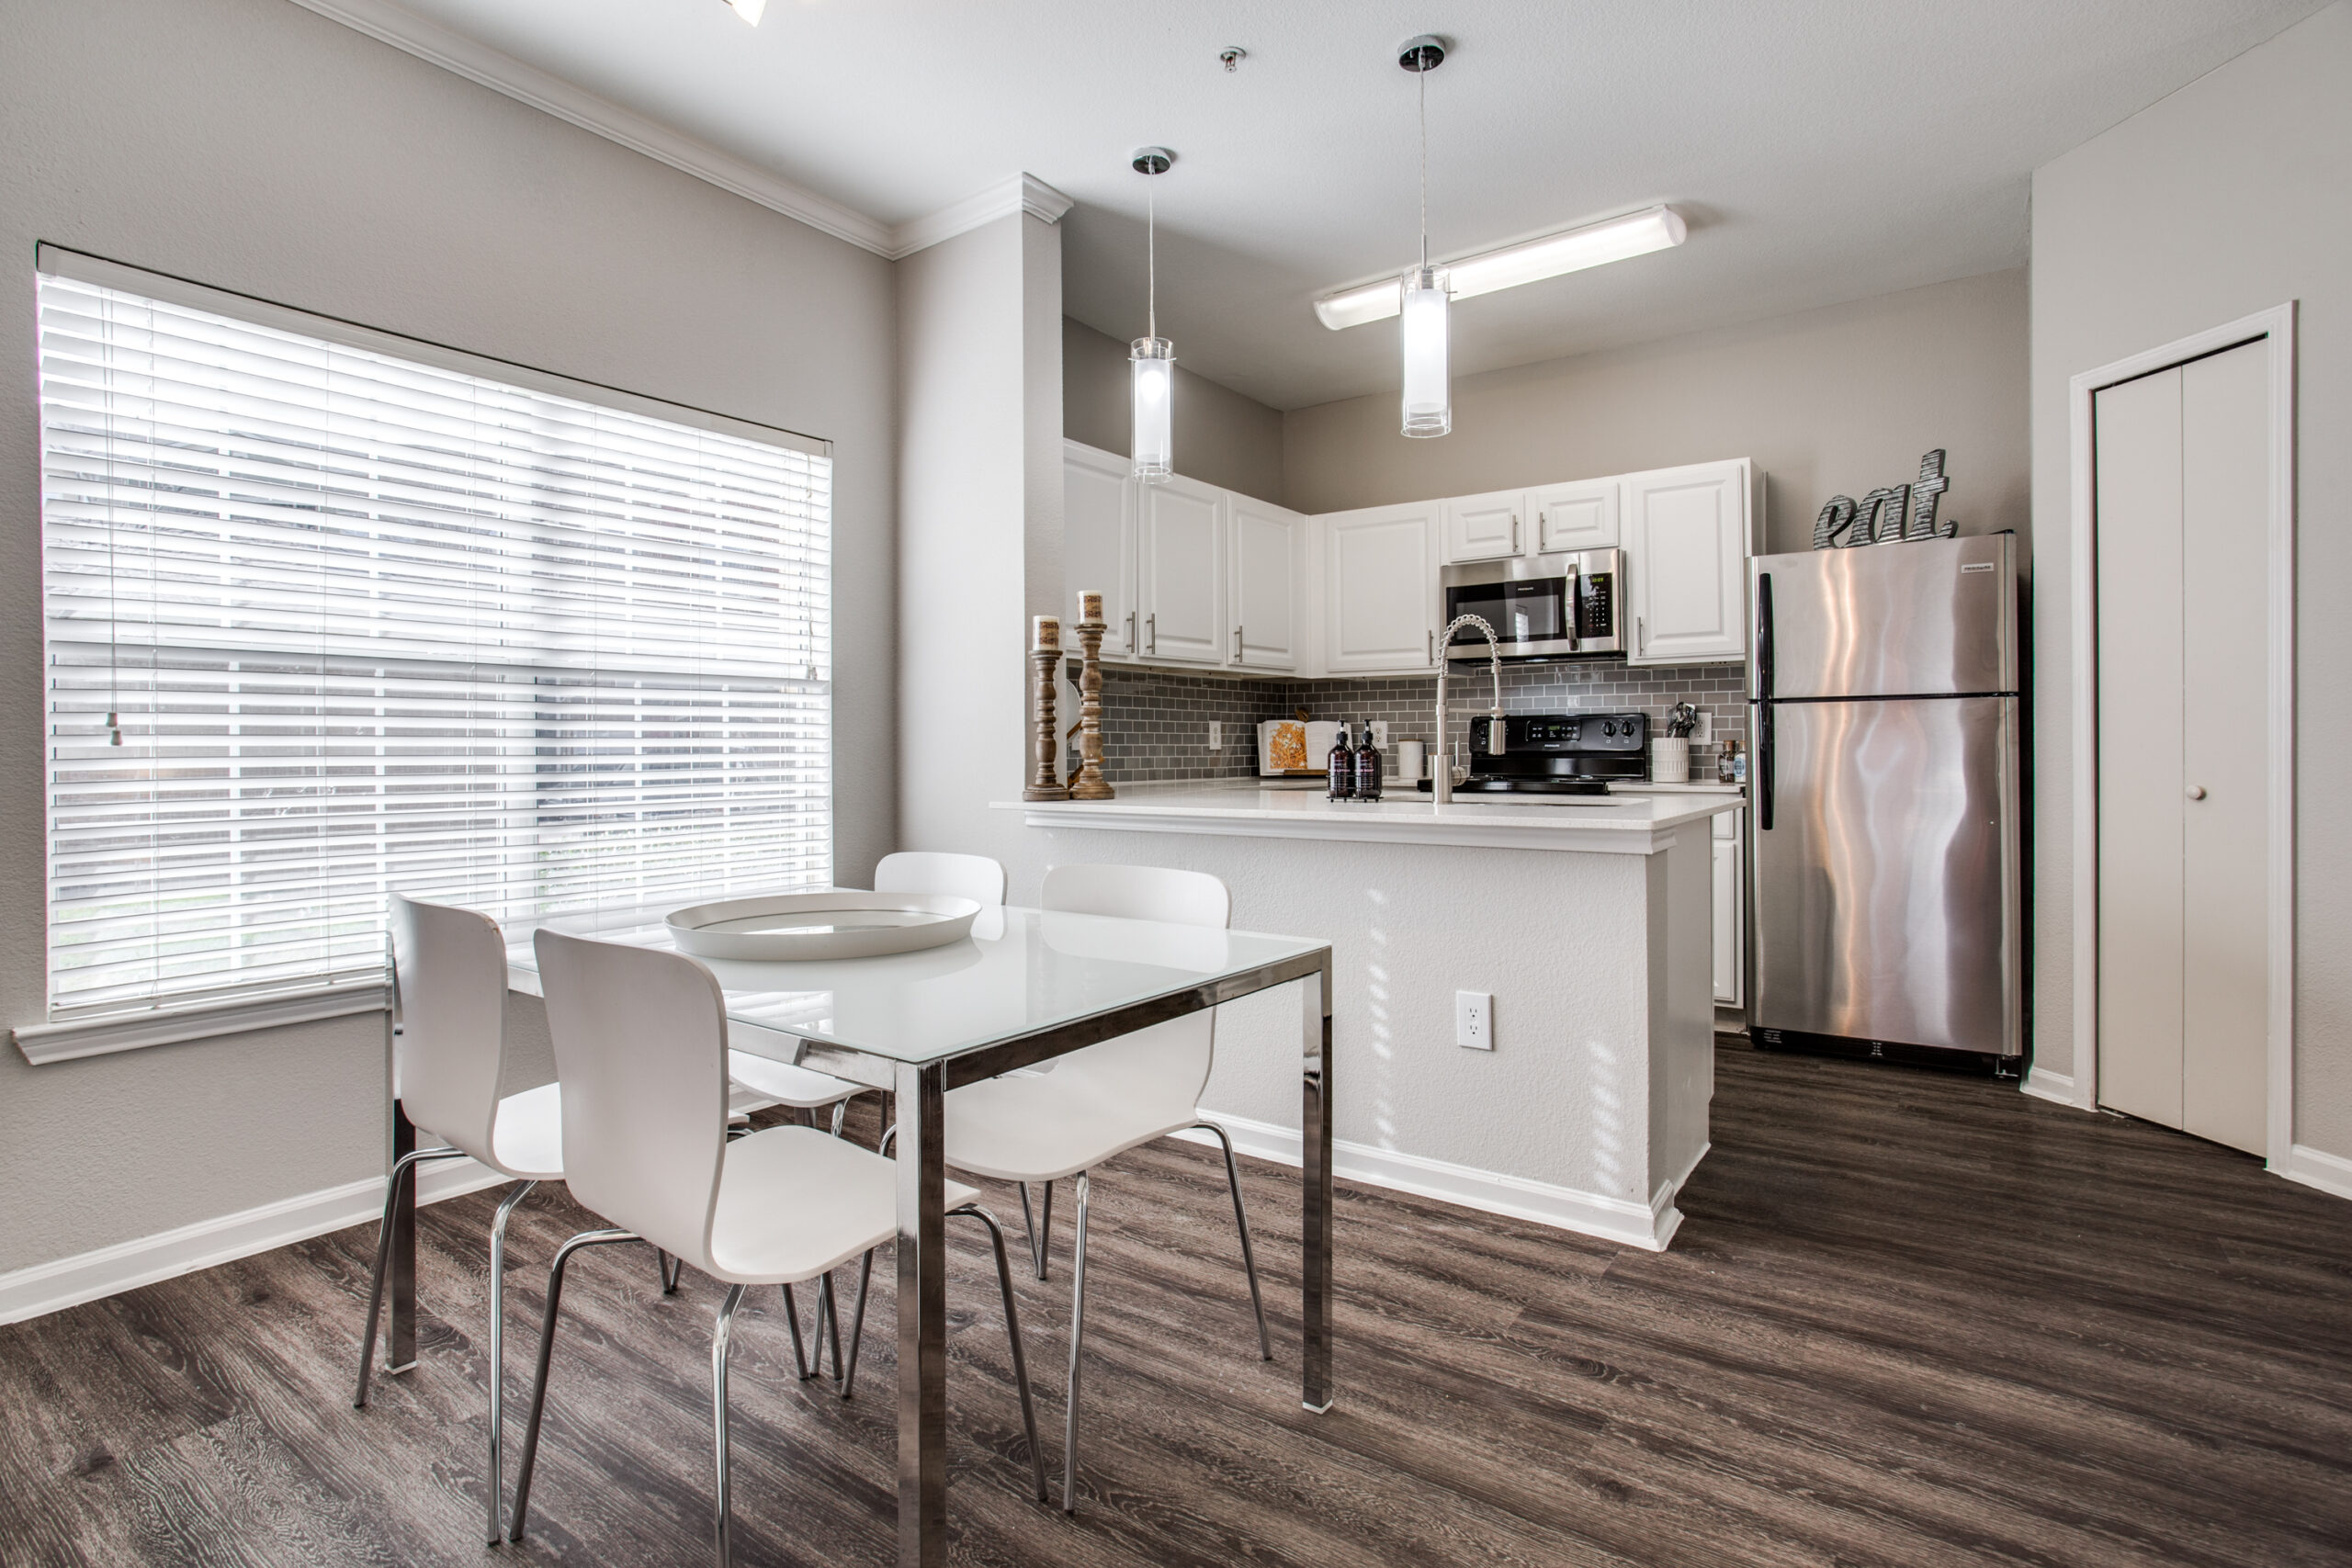 upgraded tile backsplash in kitchen that opens to dining room